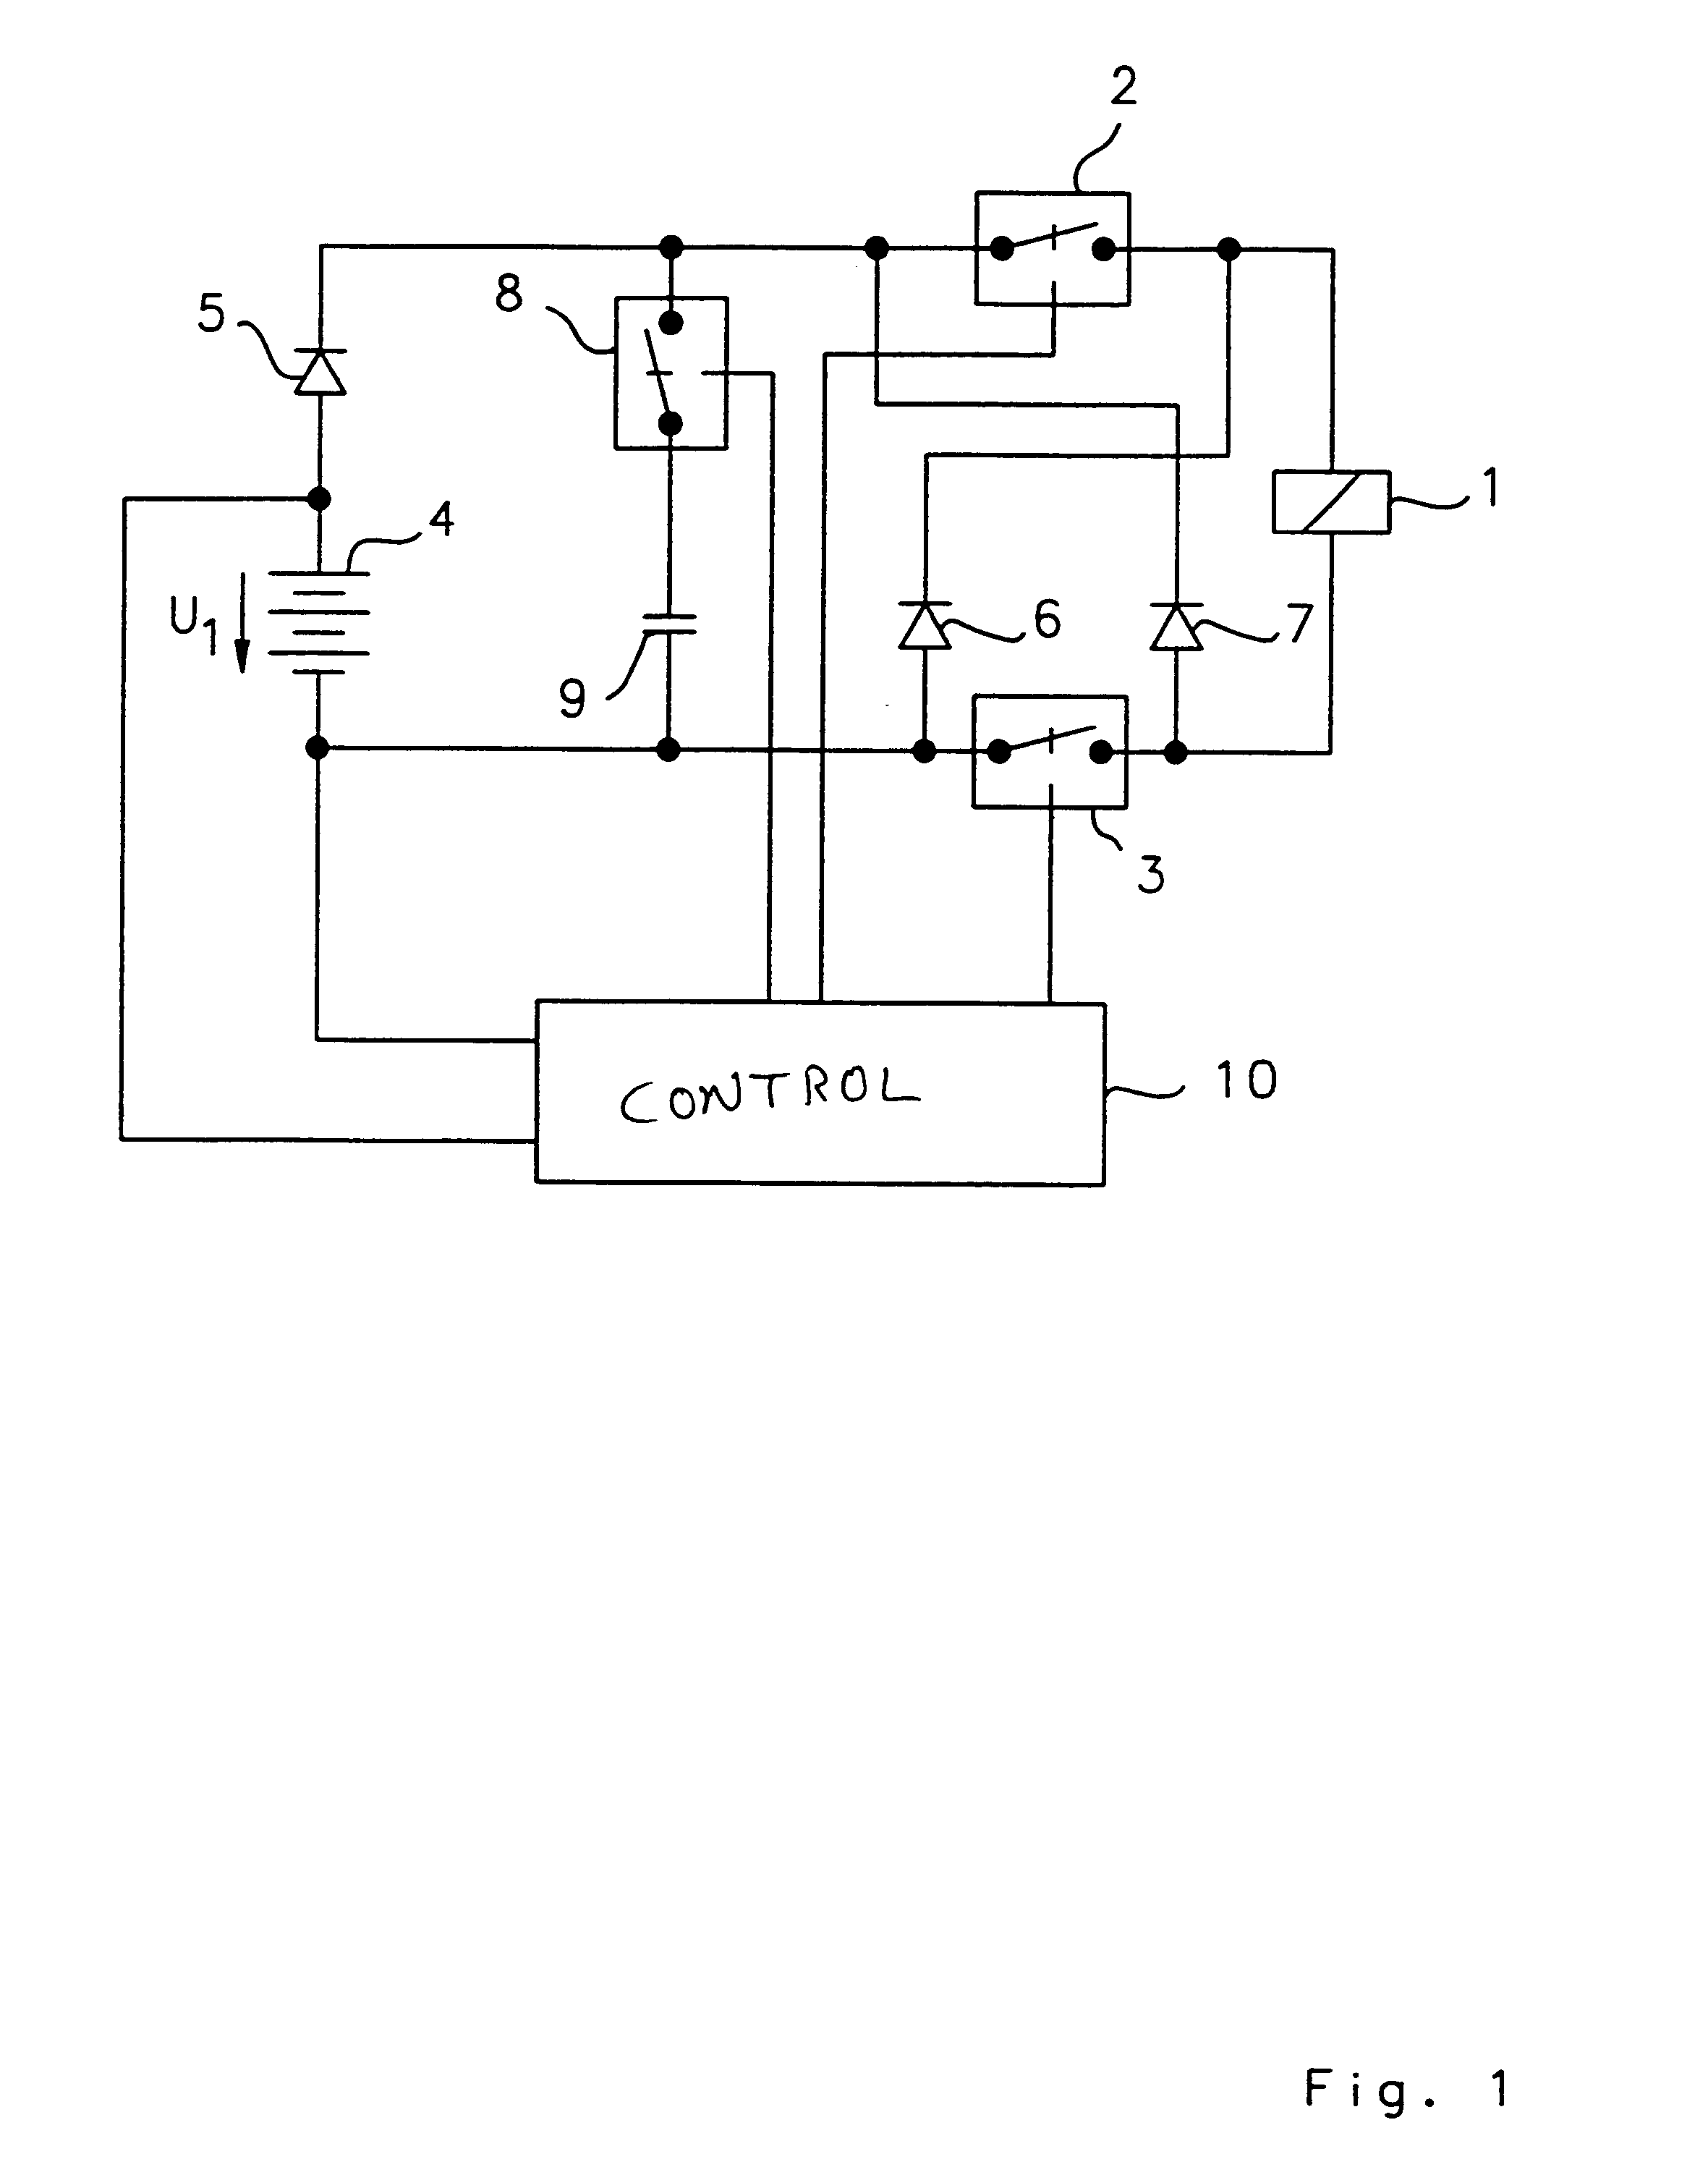 Circuit arrangement for operating a solenoid actuator